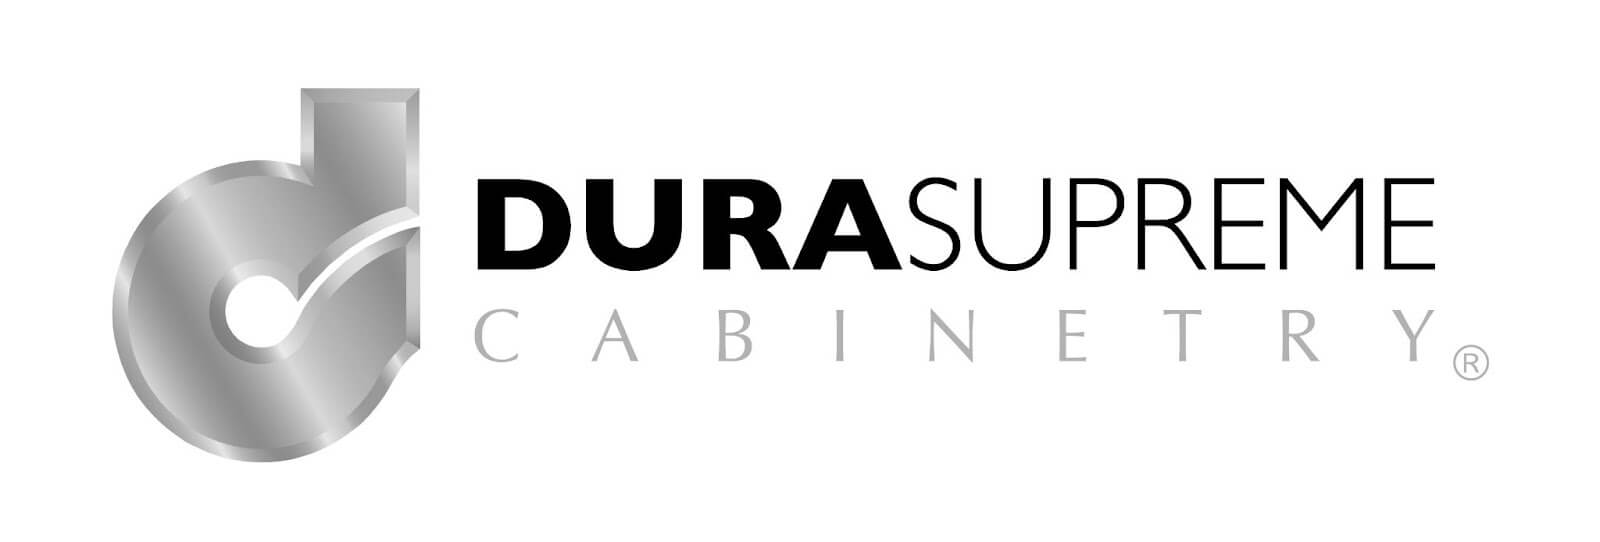 Dura Supreme logo